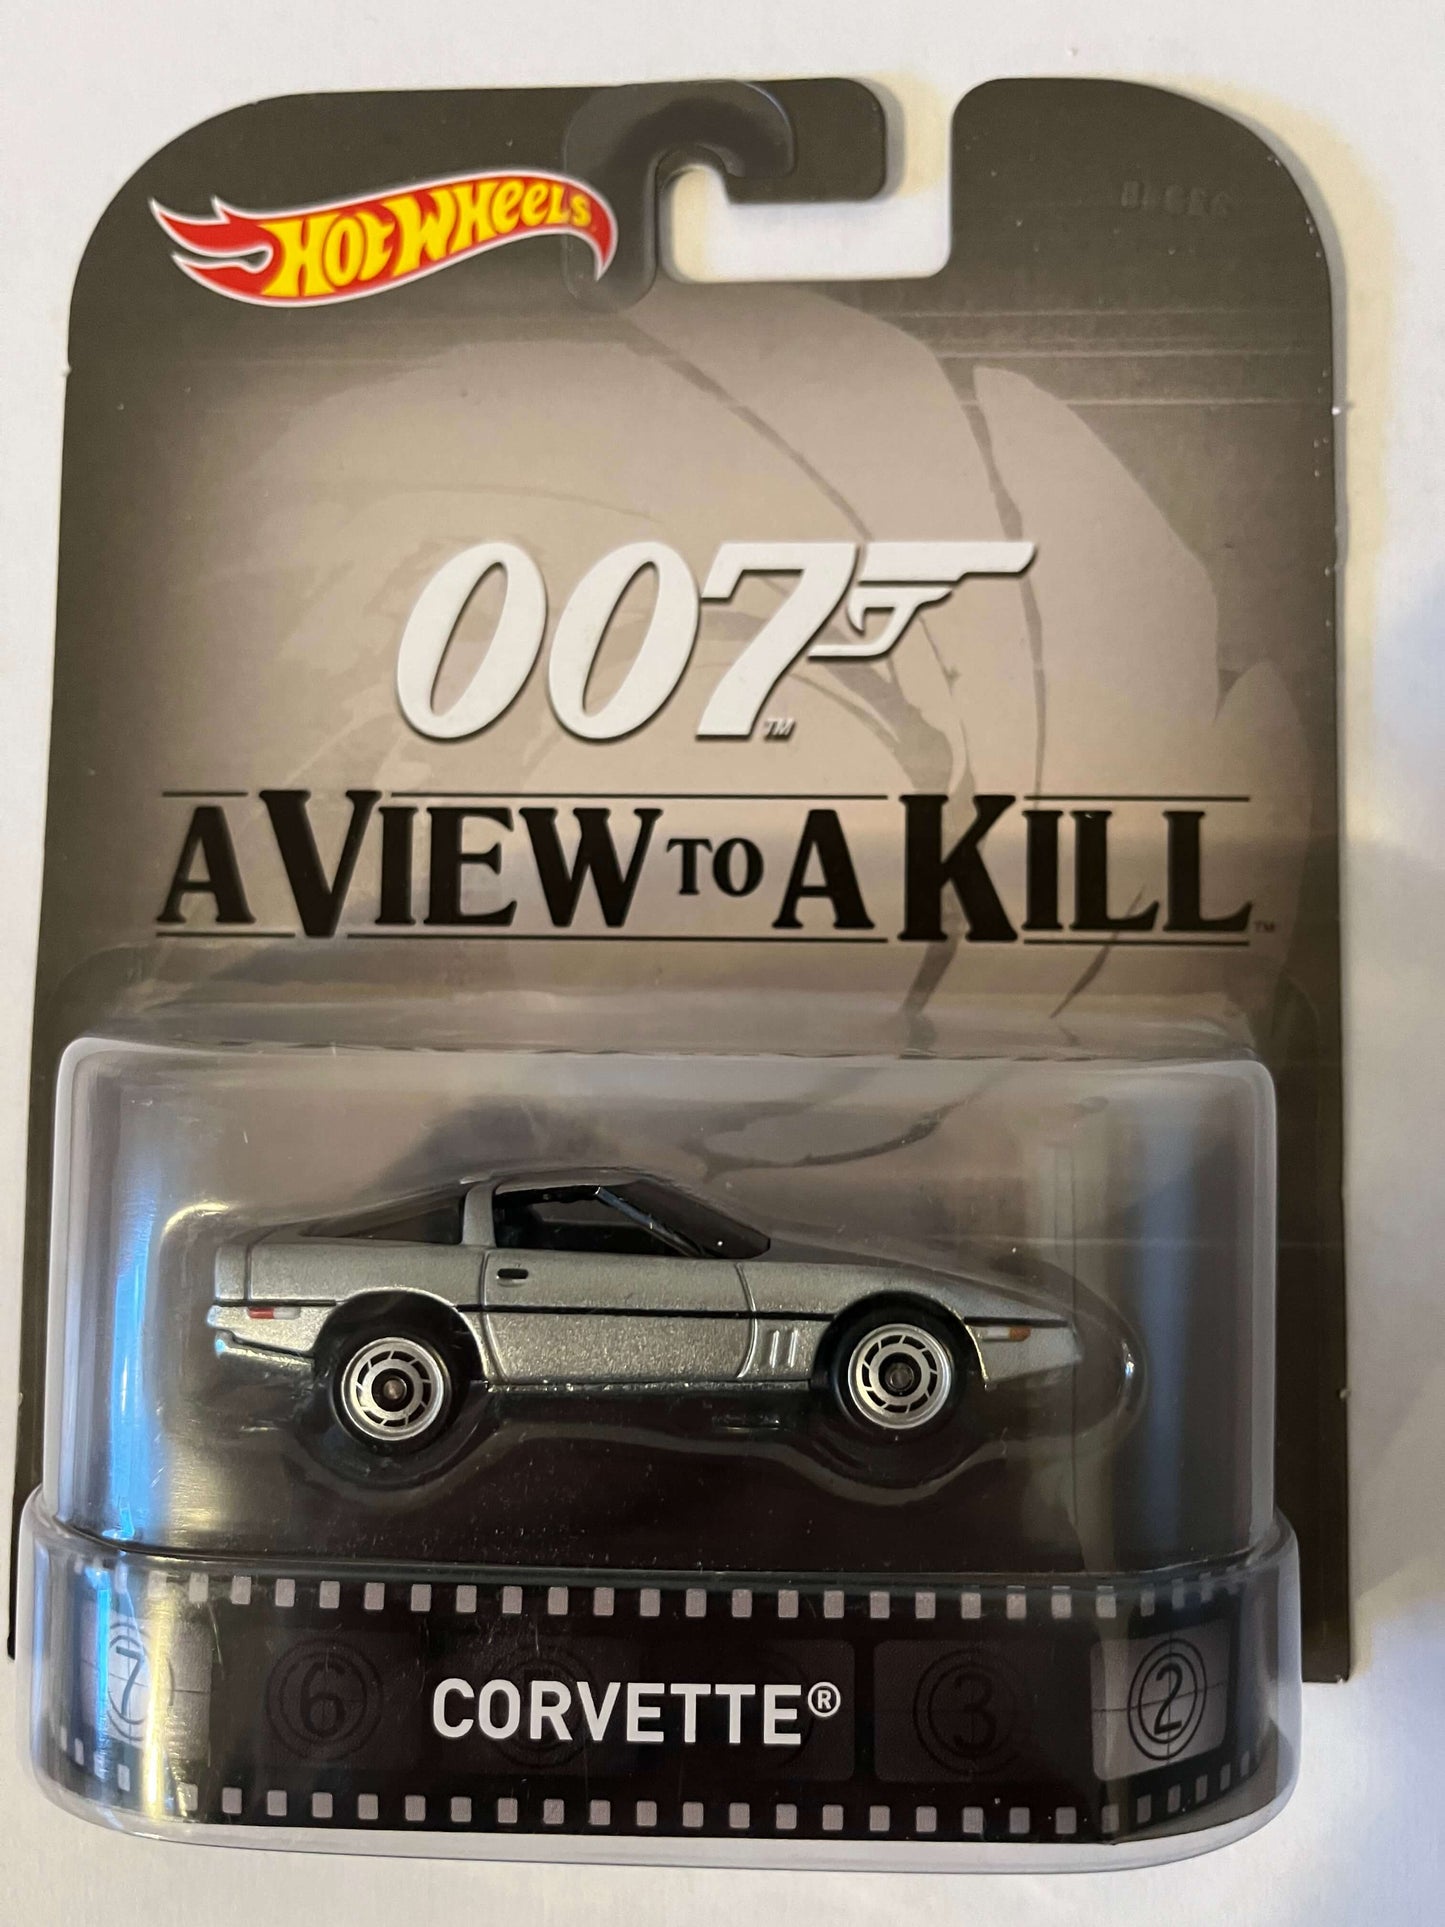 Hotwheels 007 A View To A Kill Corvette